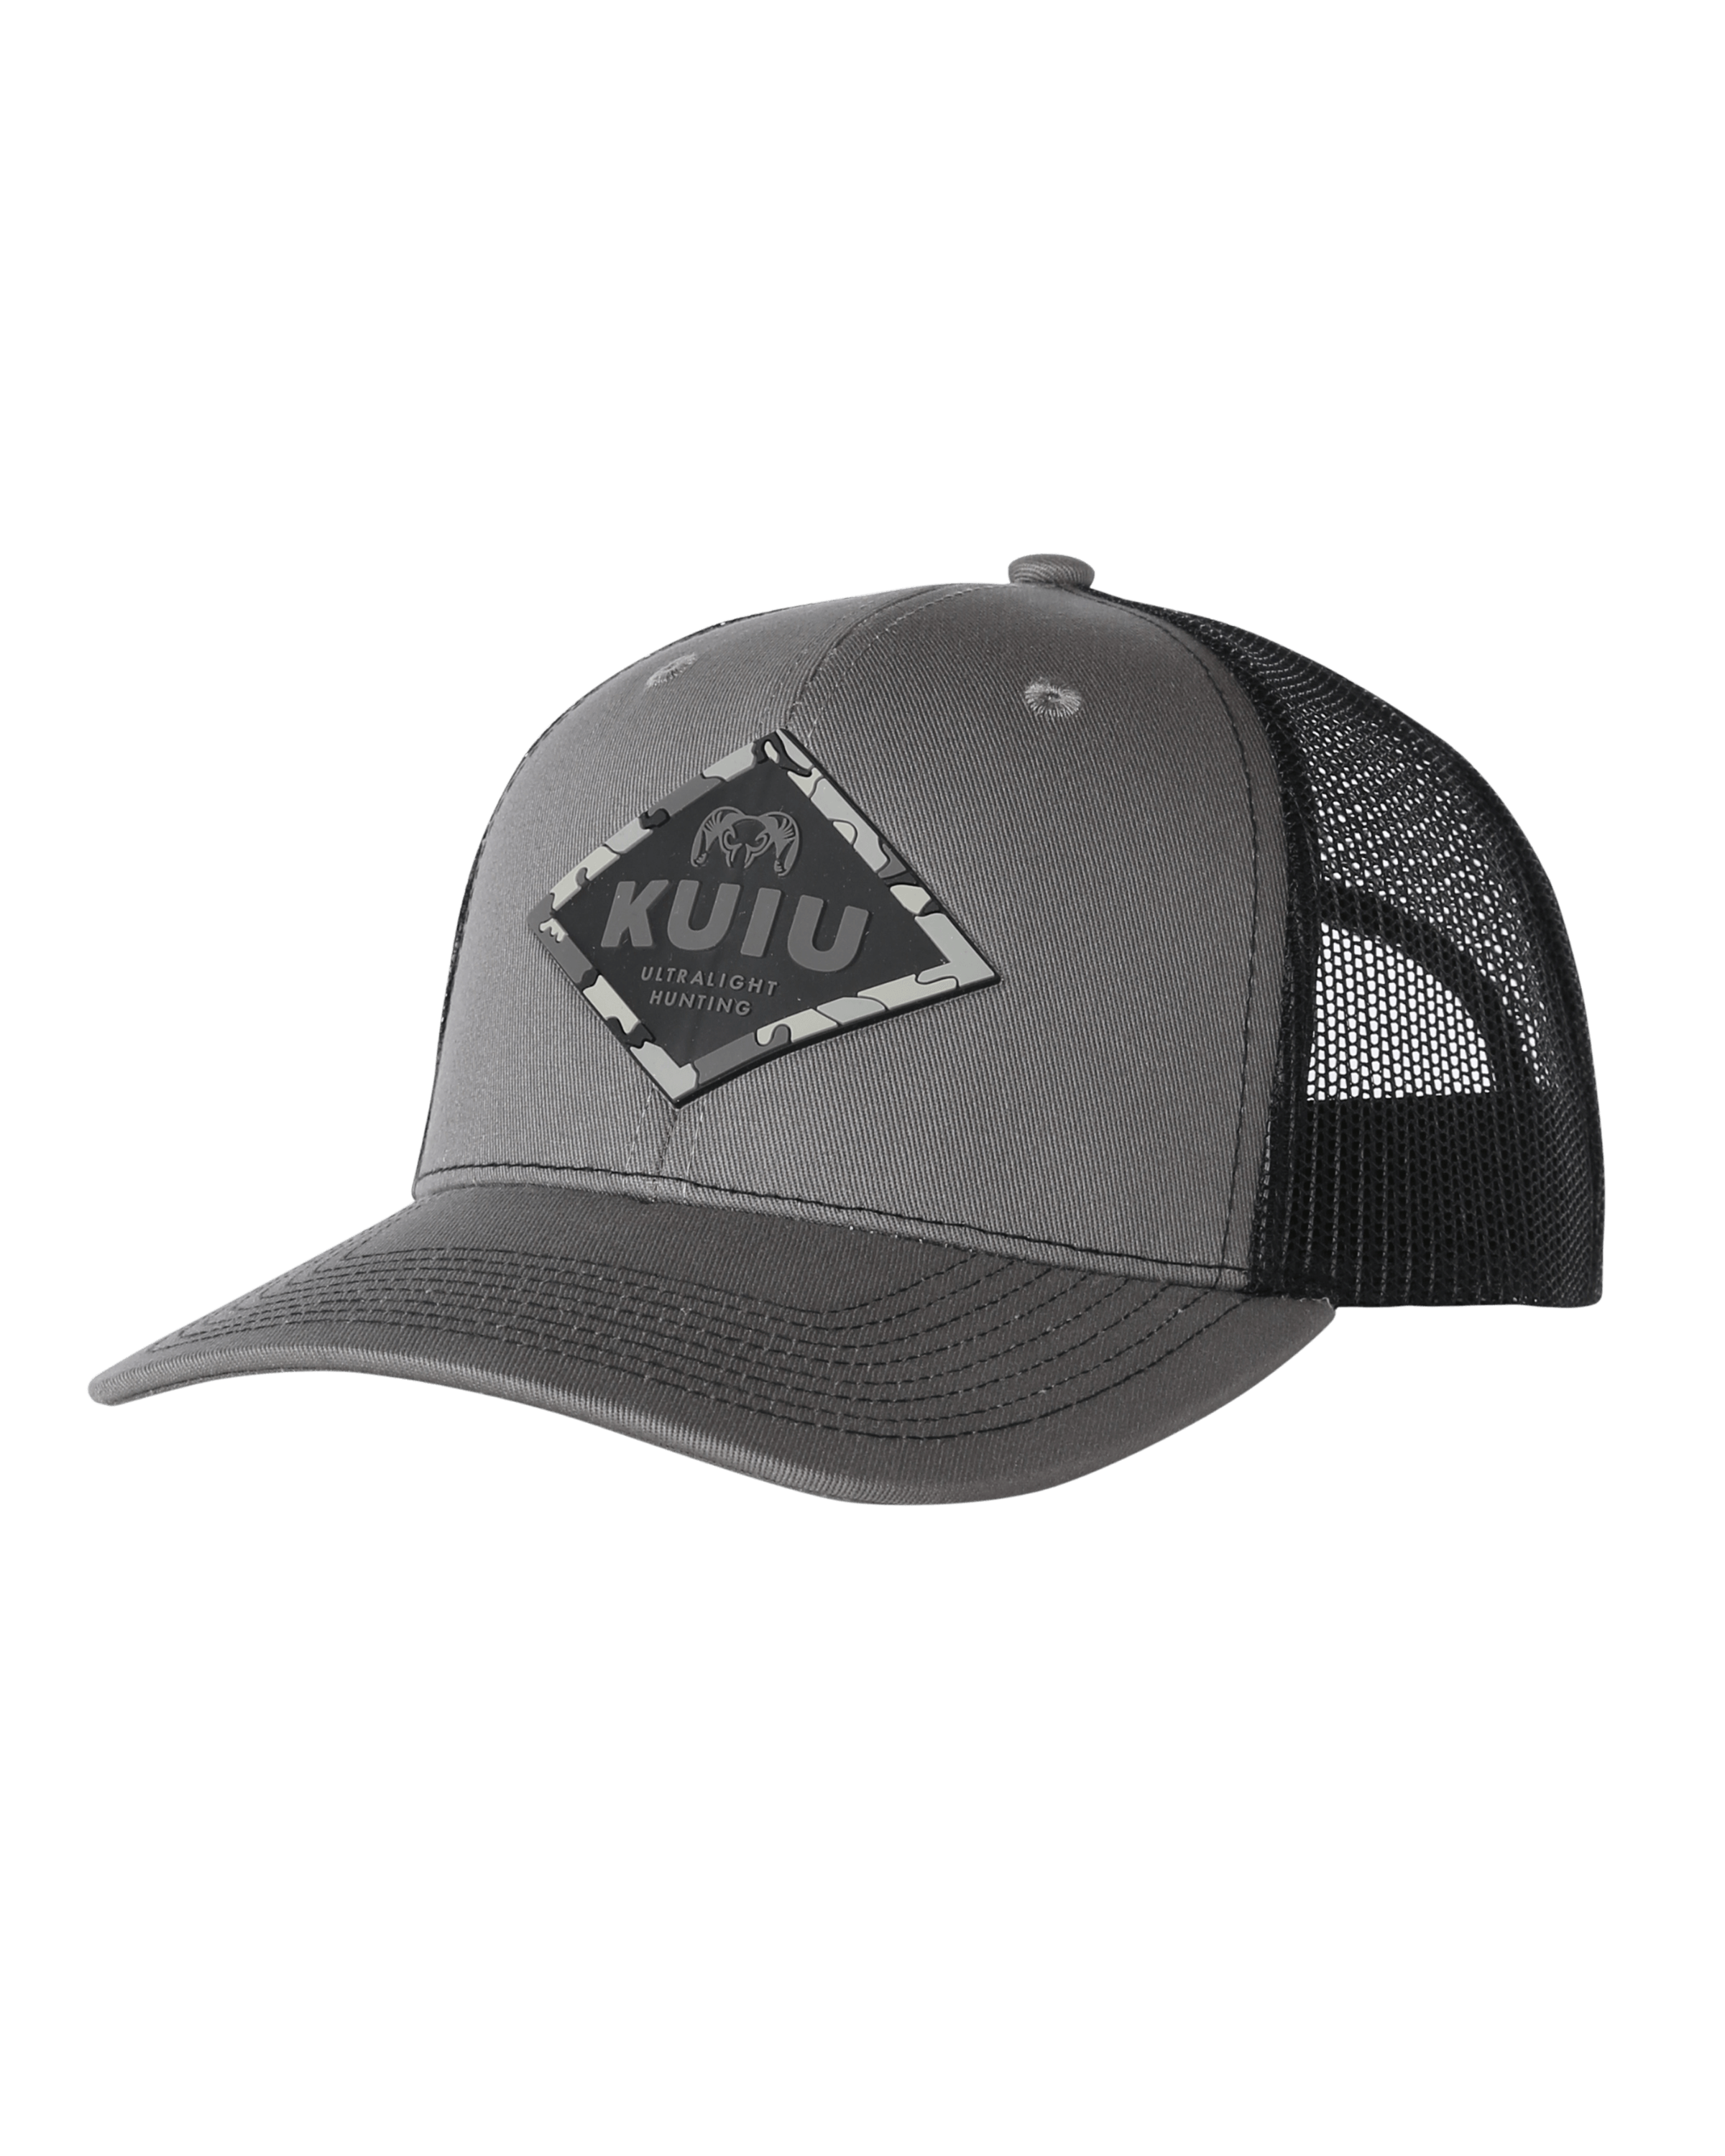 KUIU Vias Storm Sign Hat in Charcoal/Black